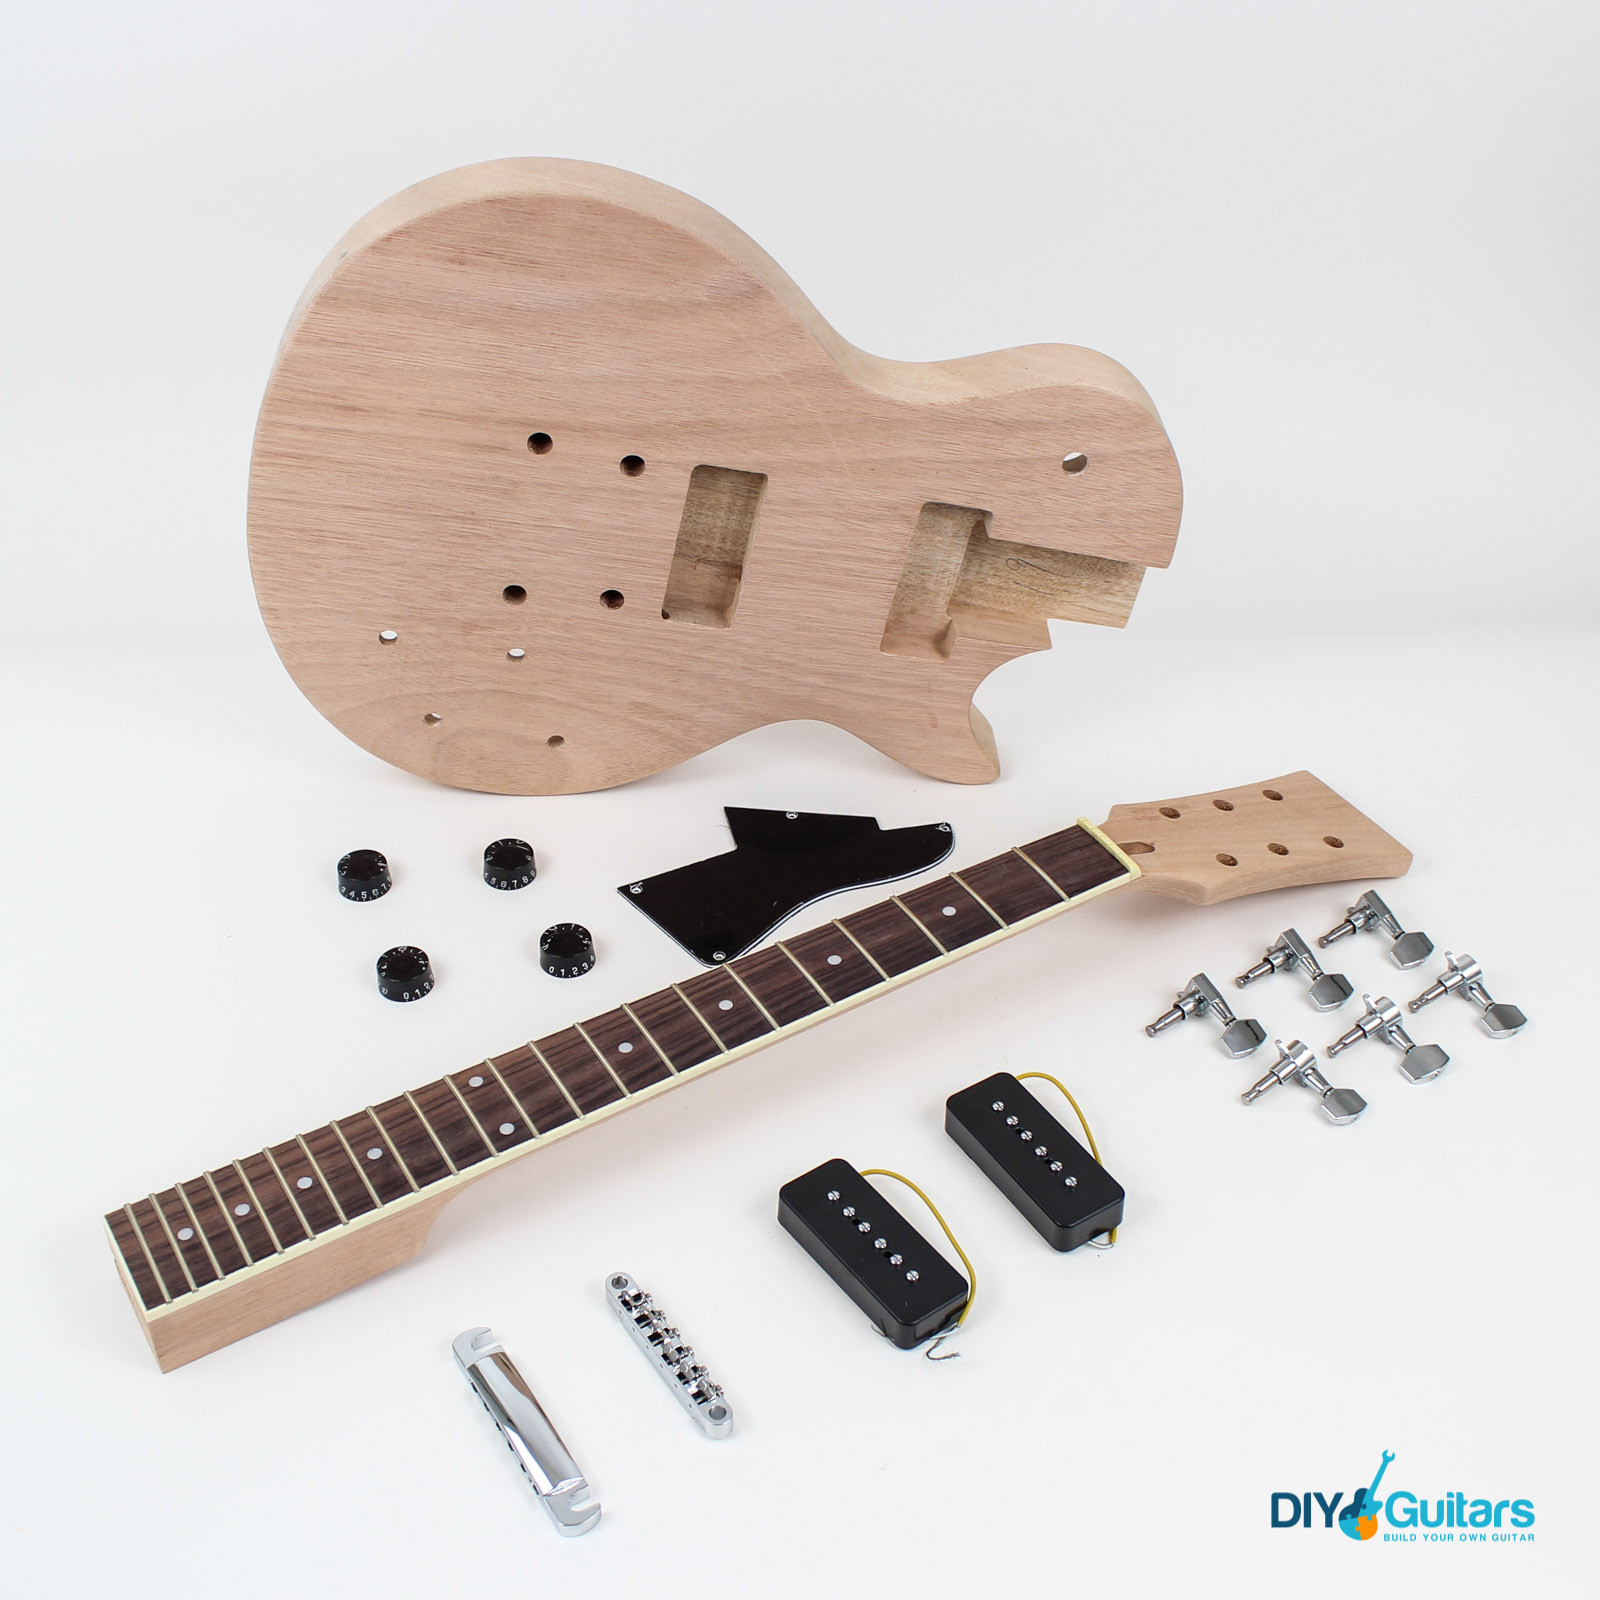 Best ideas about Les Paul DIY Kit
. Save or Pin Gibson Les Paul JR Style Single Cutaway DIY Guitar Kit Now.